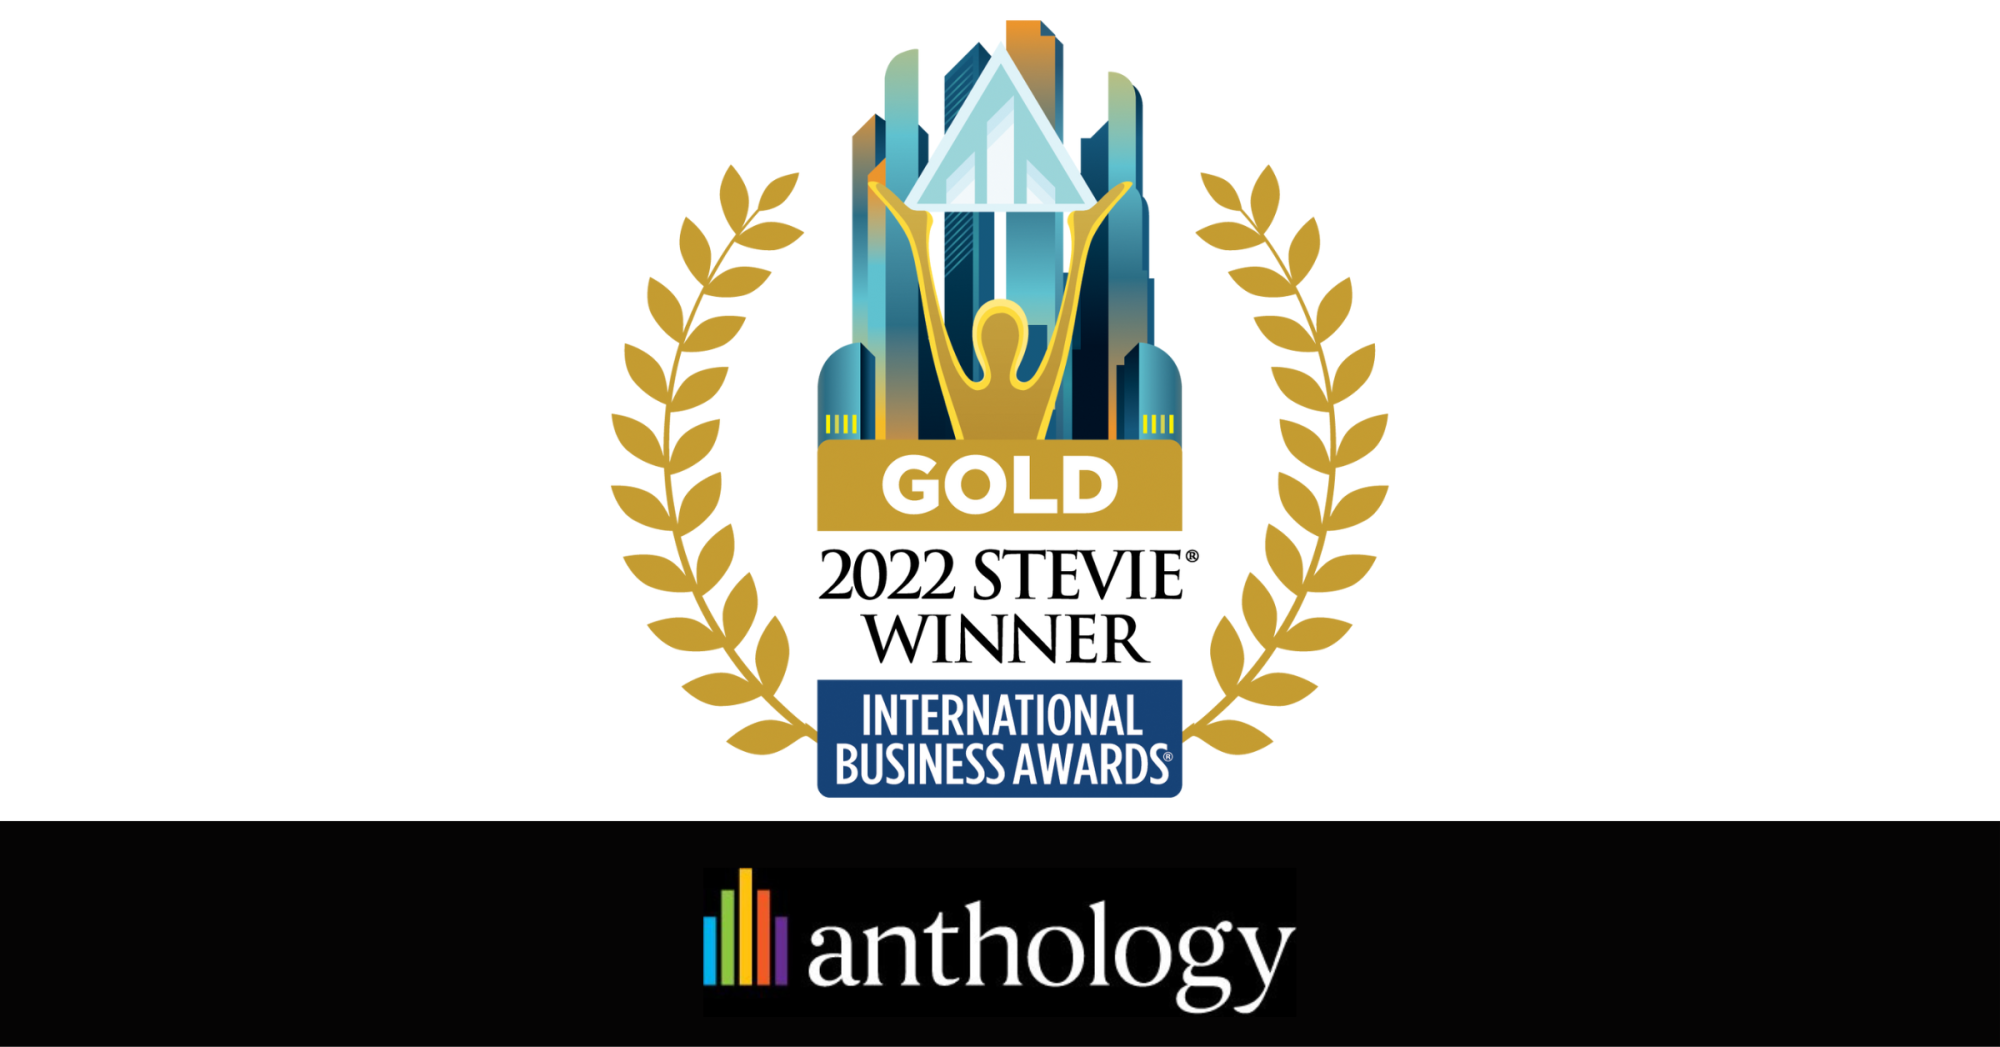 Stevie Award Winner logo lockup with the Anthology logo